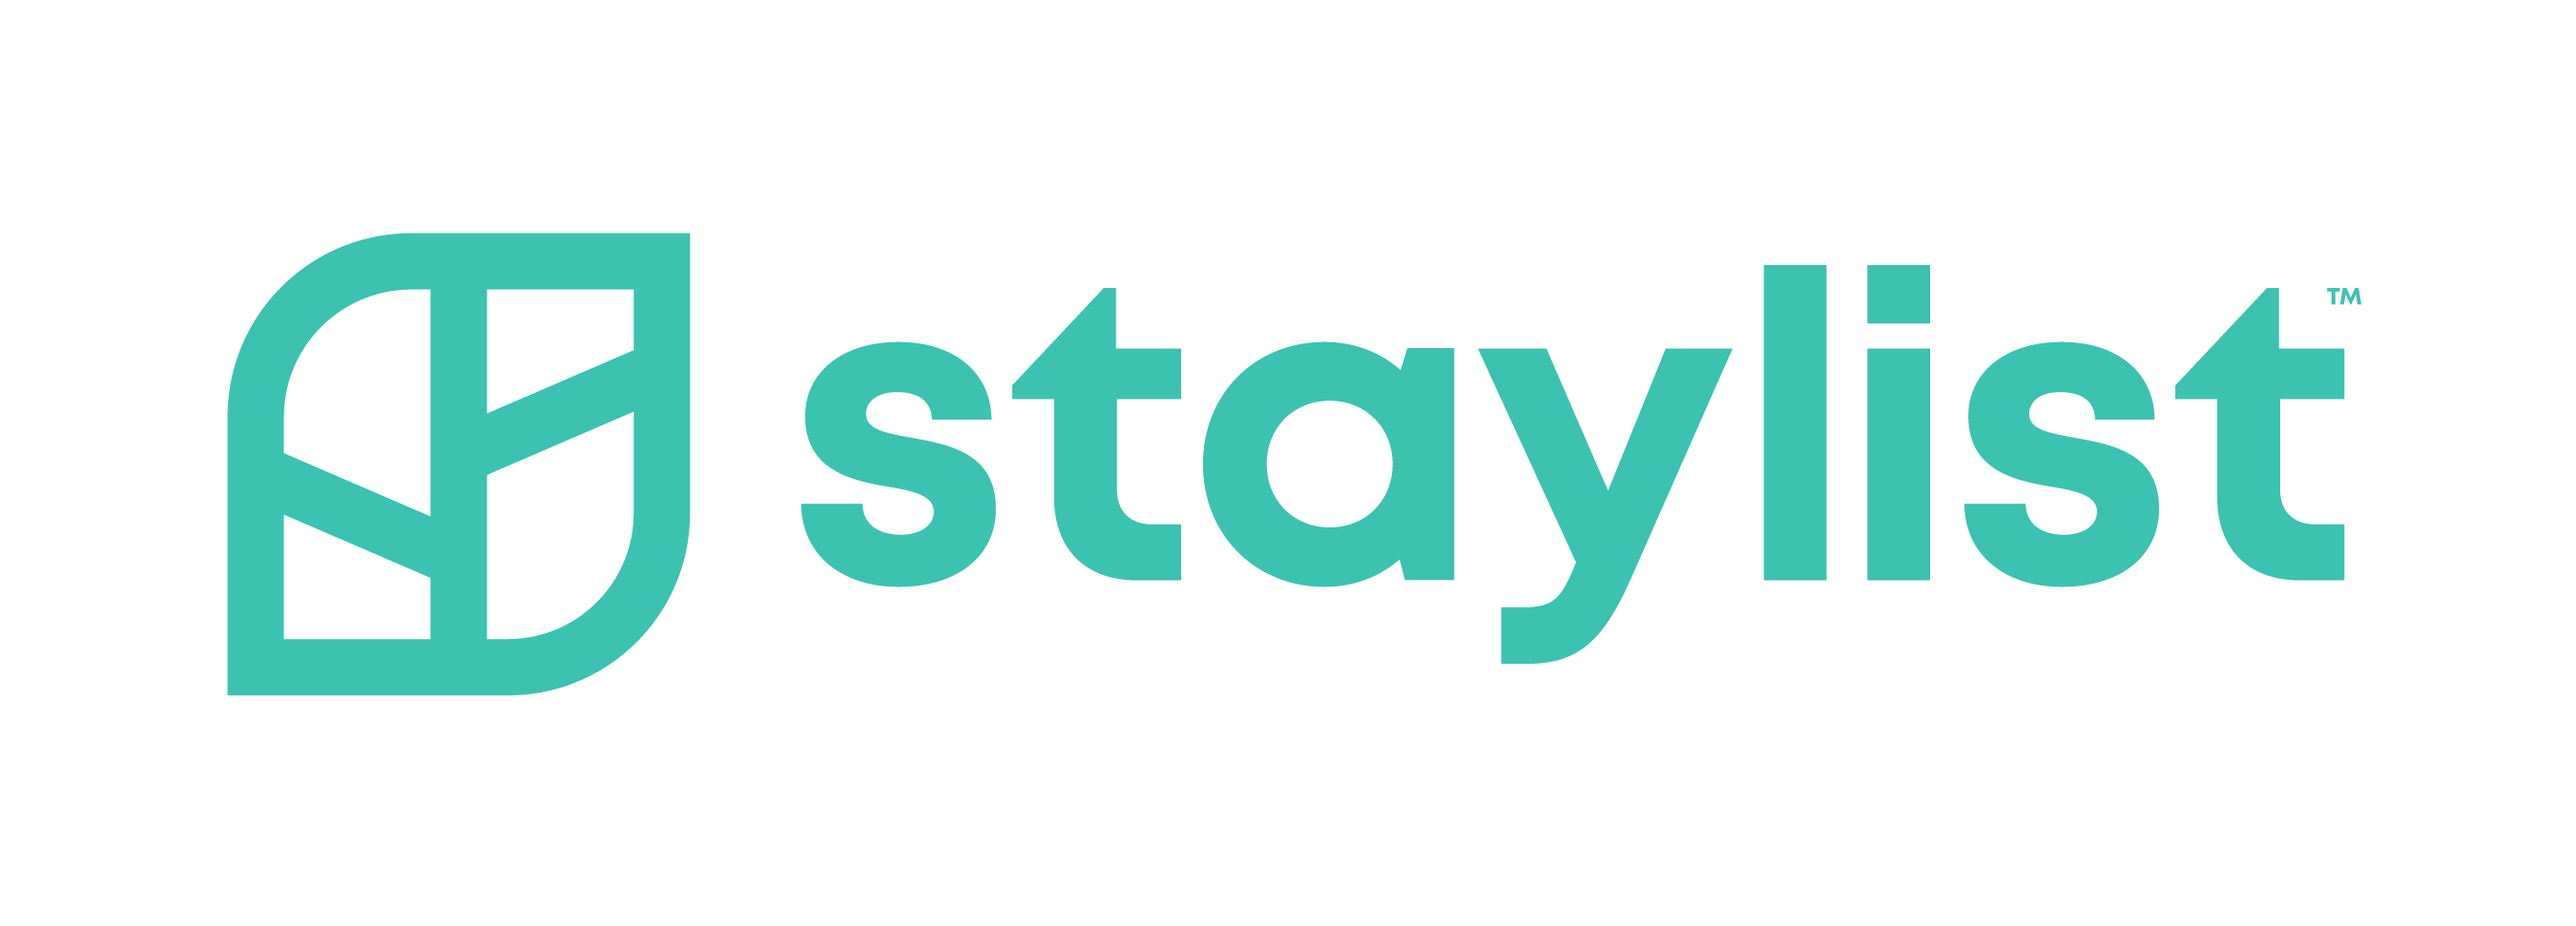 Staylist